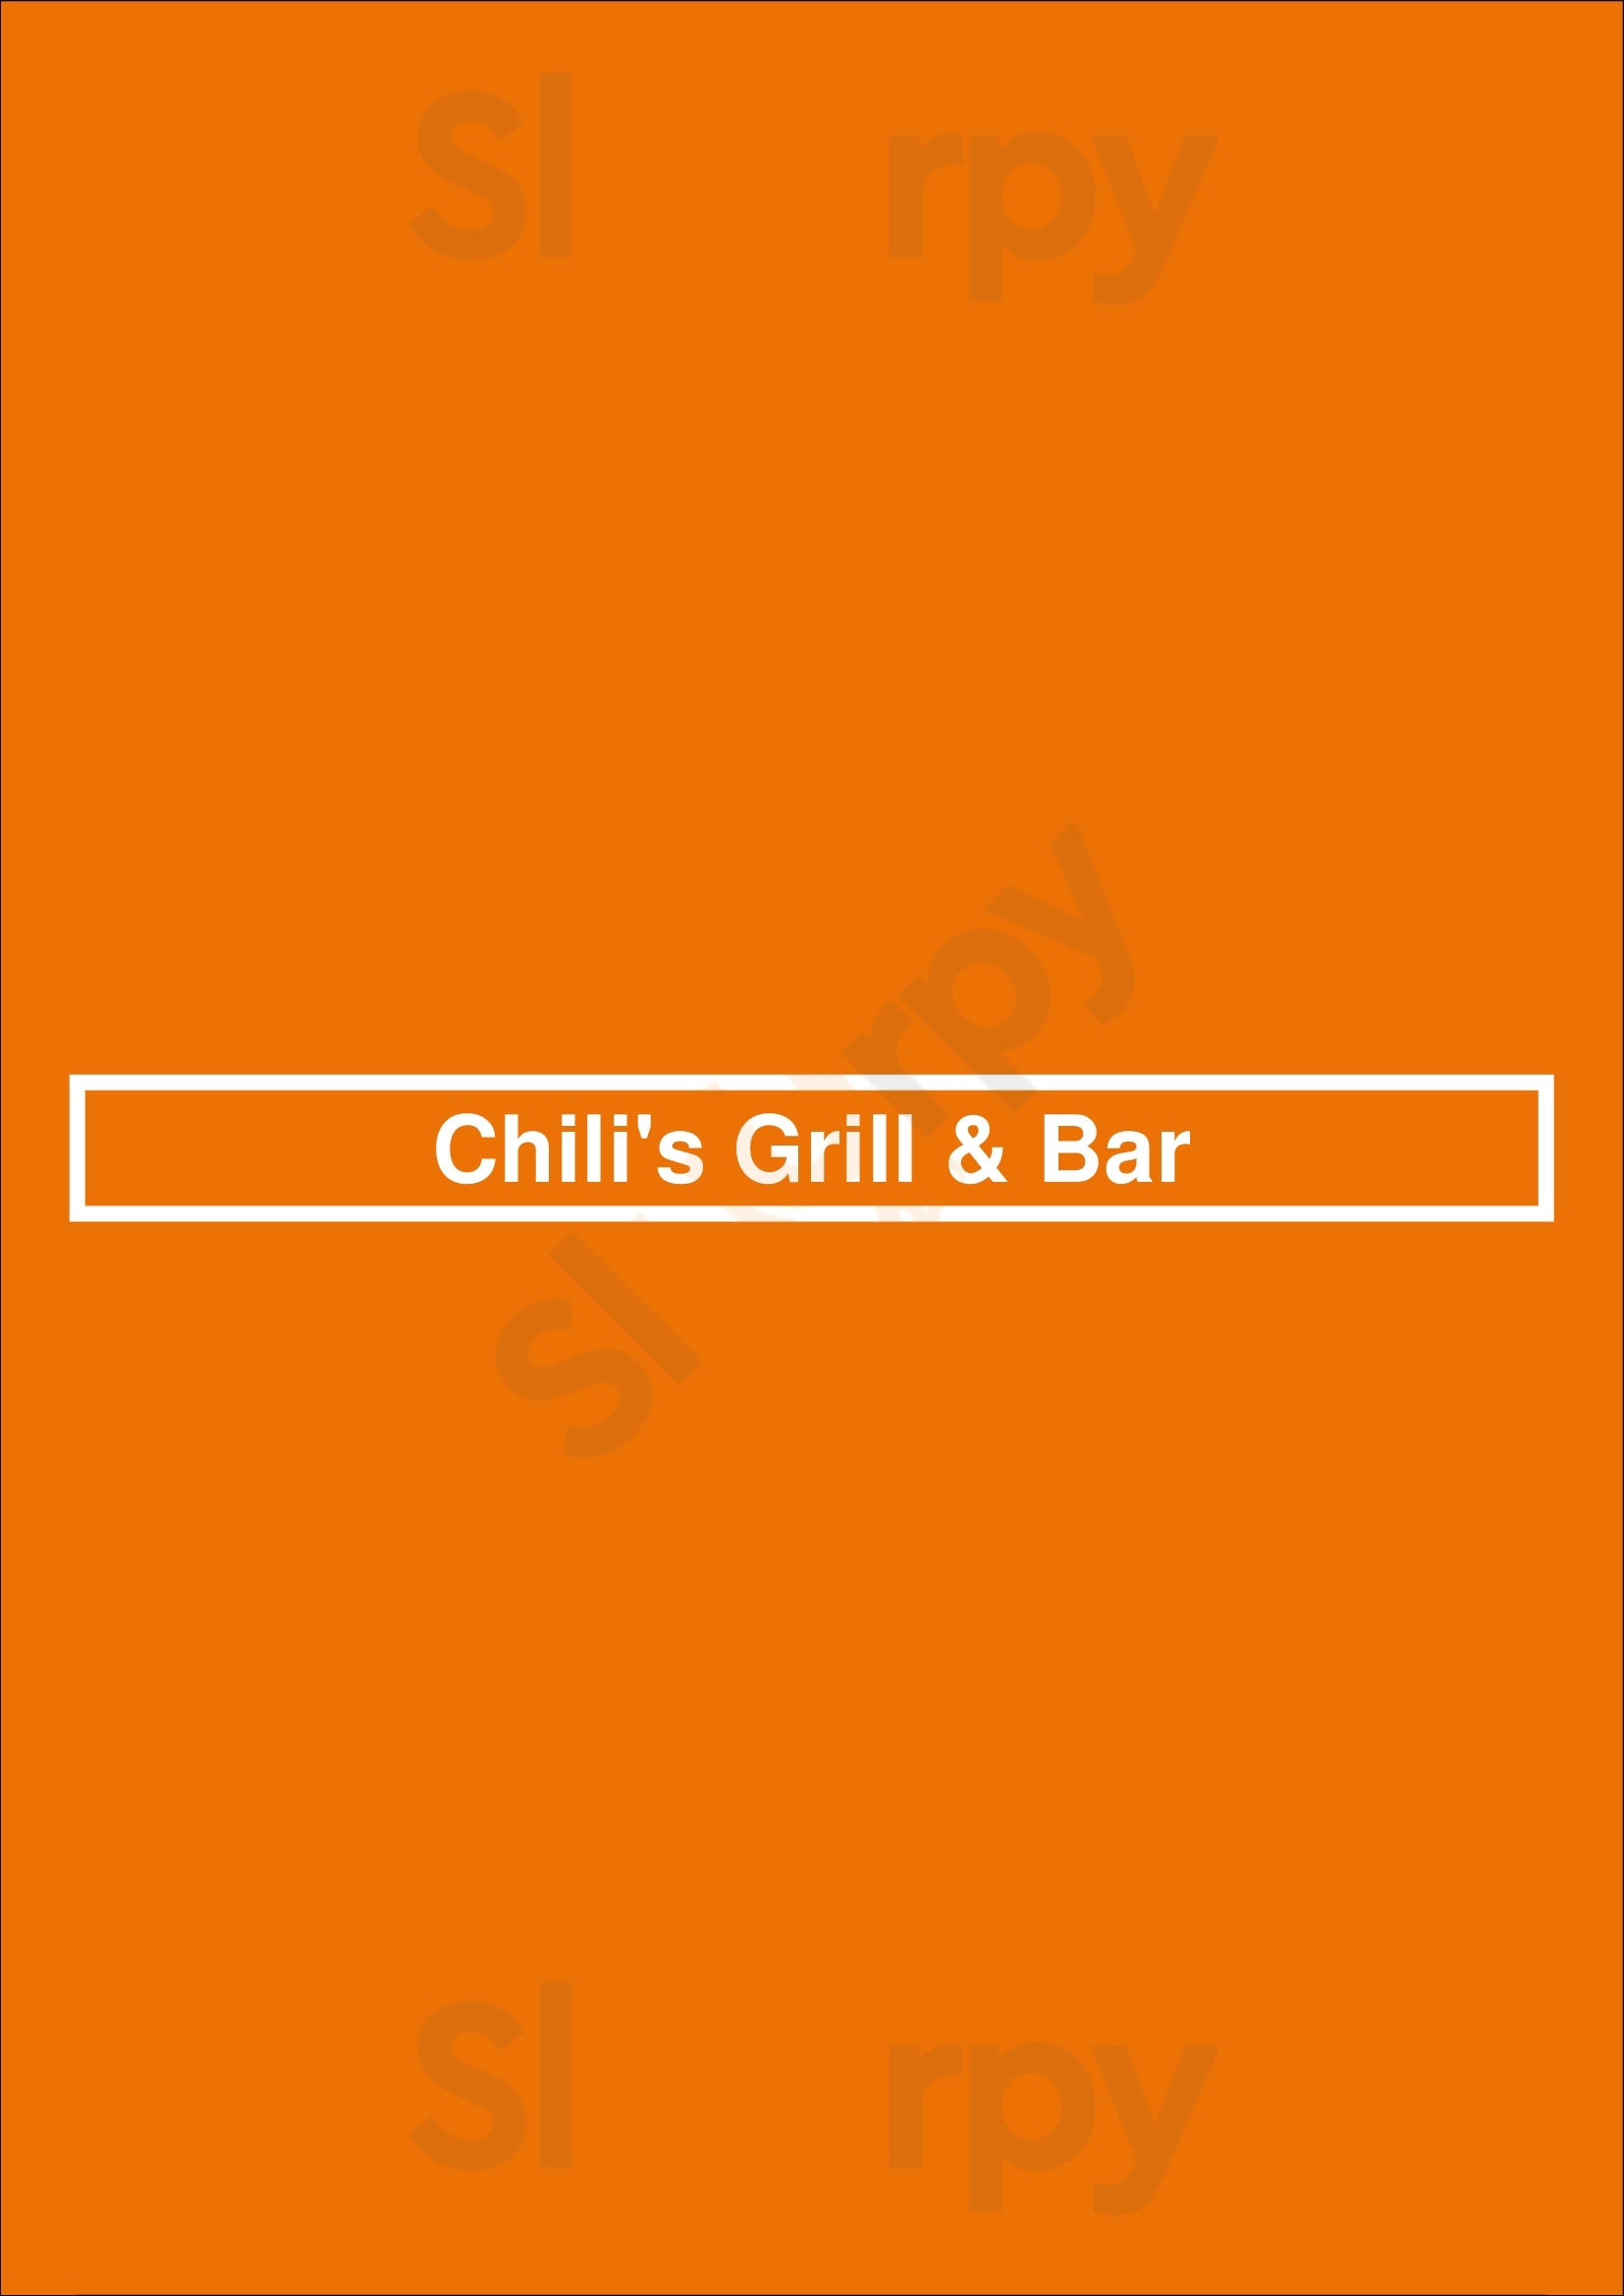 Chili's Grill & Bar San Antonio Menu - 1